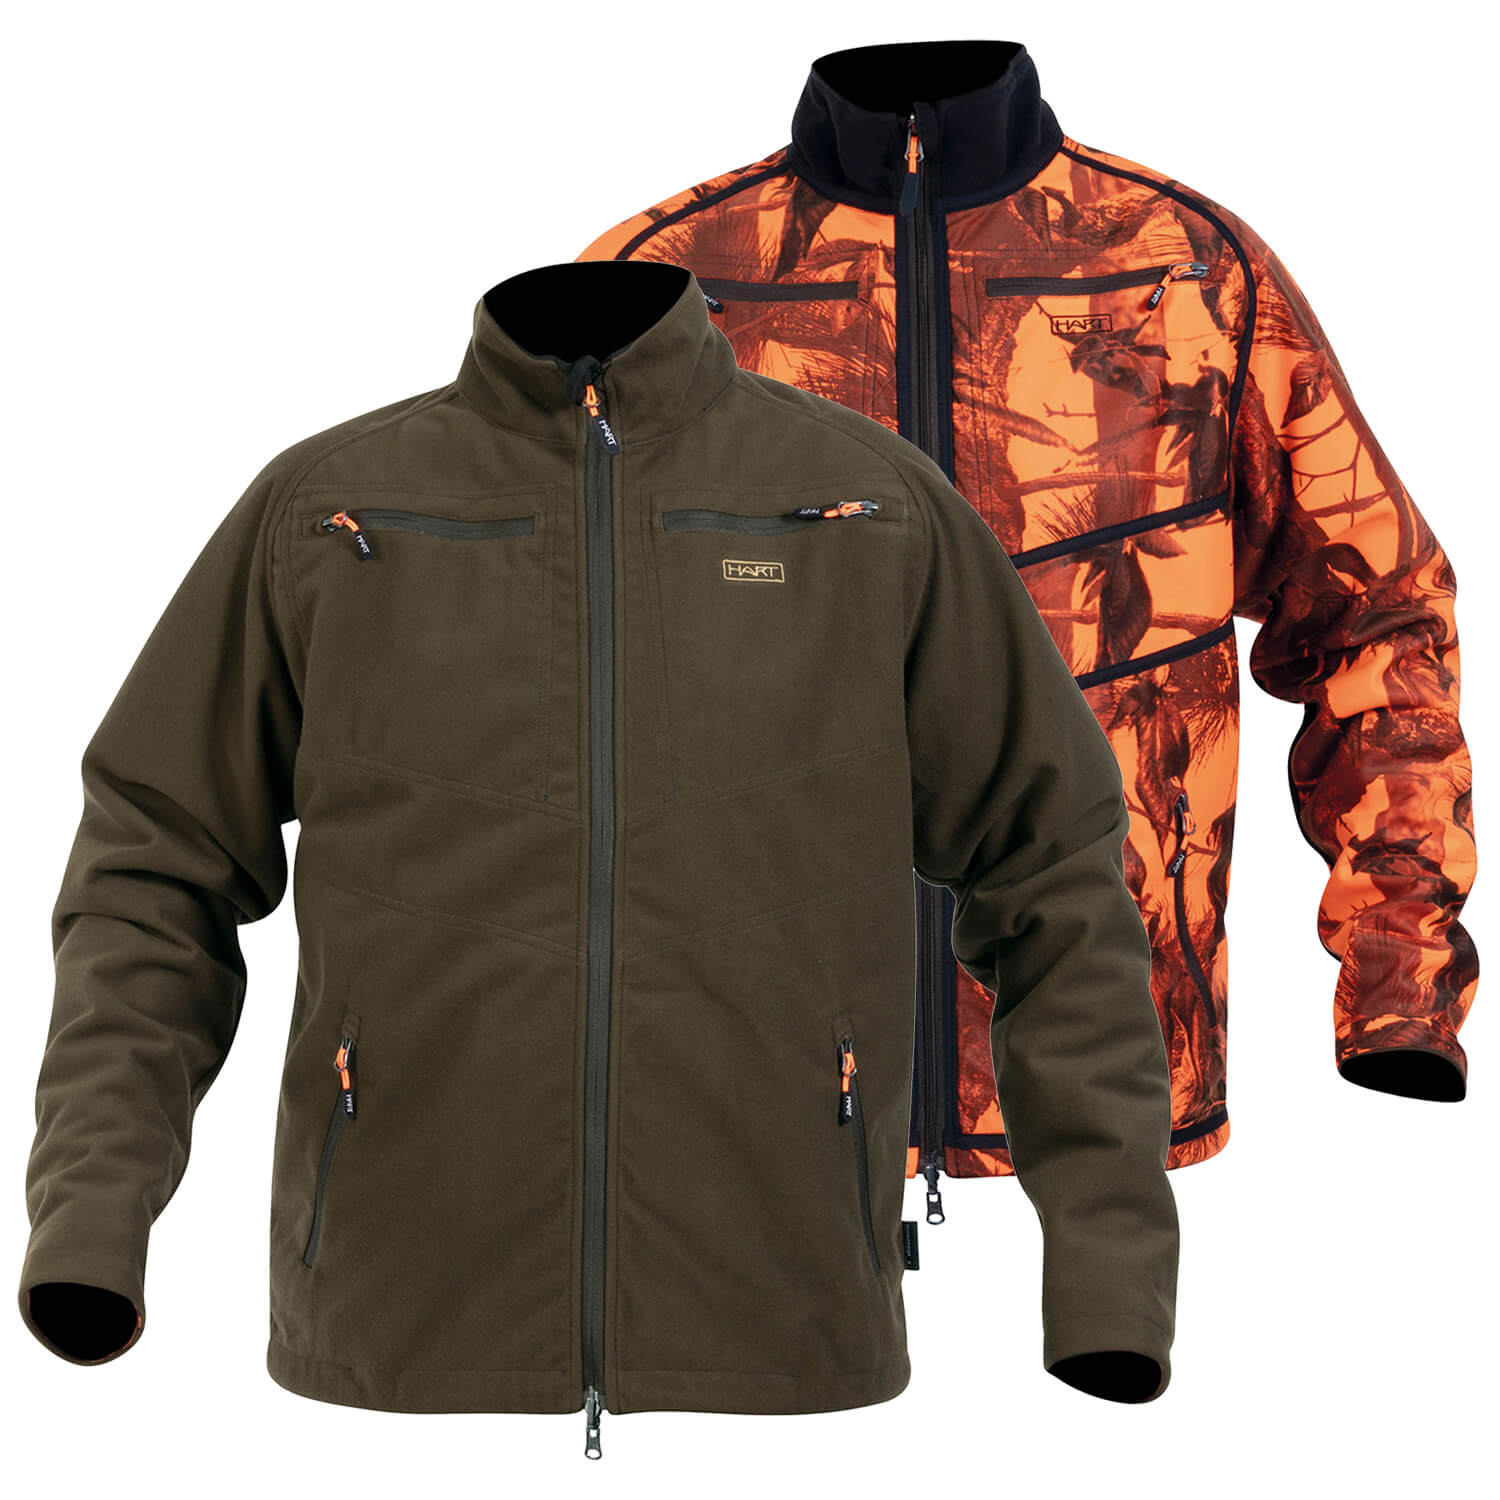 Hart reversible jacket Sosbun-O - Driven Hunt